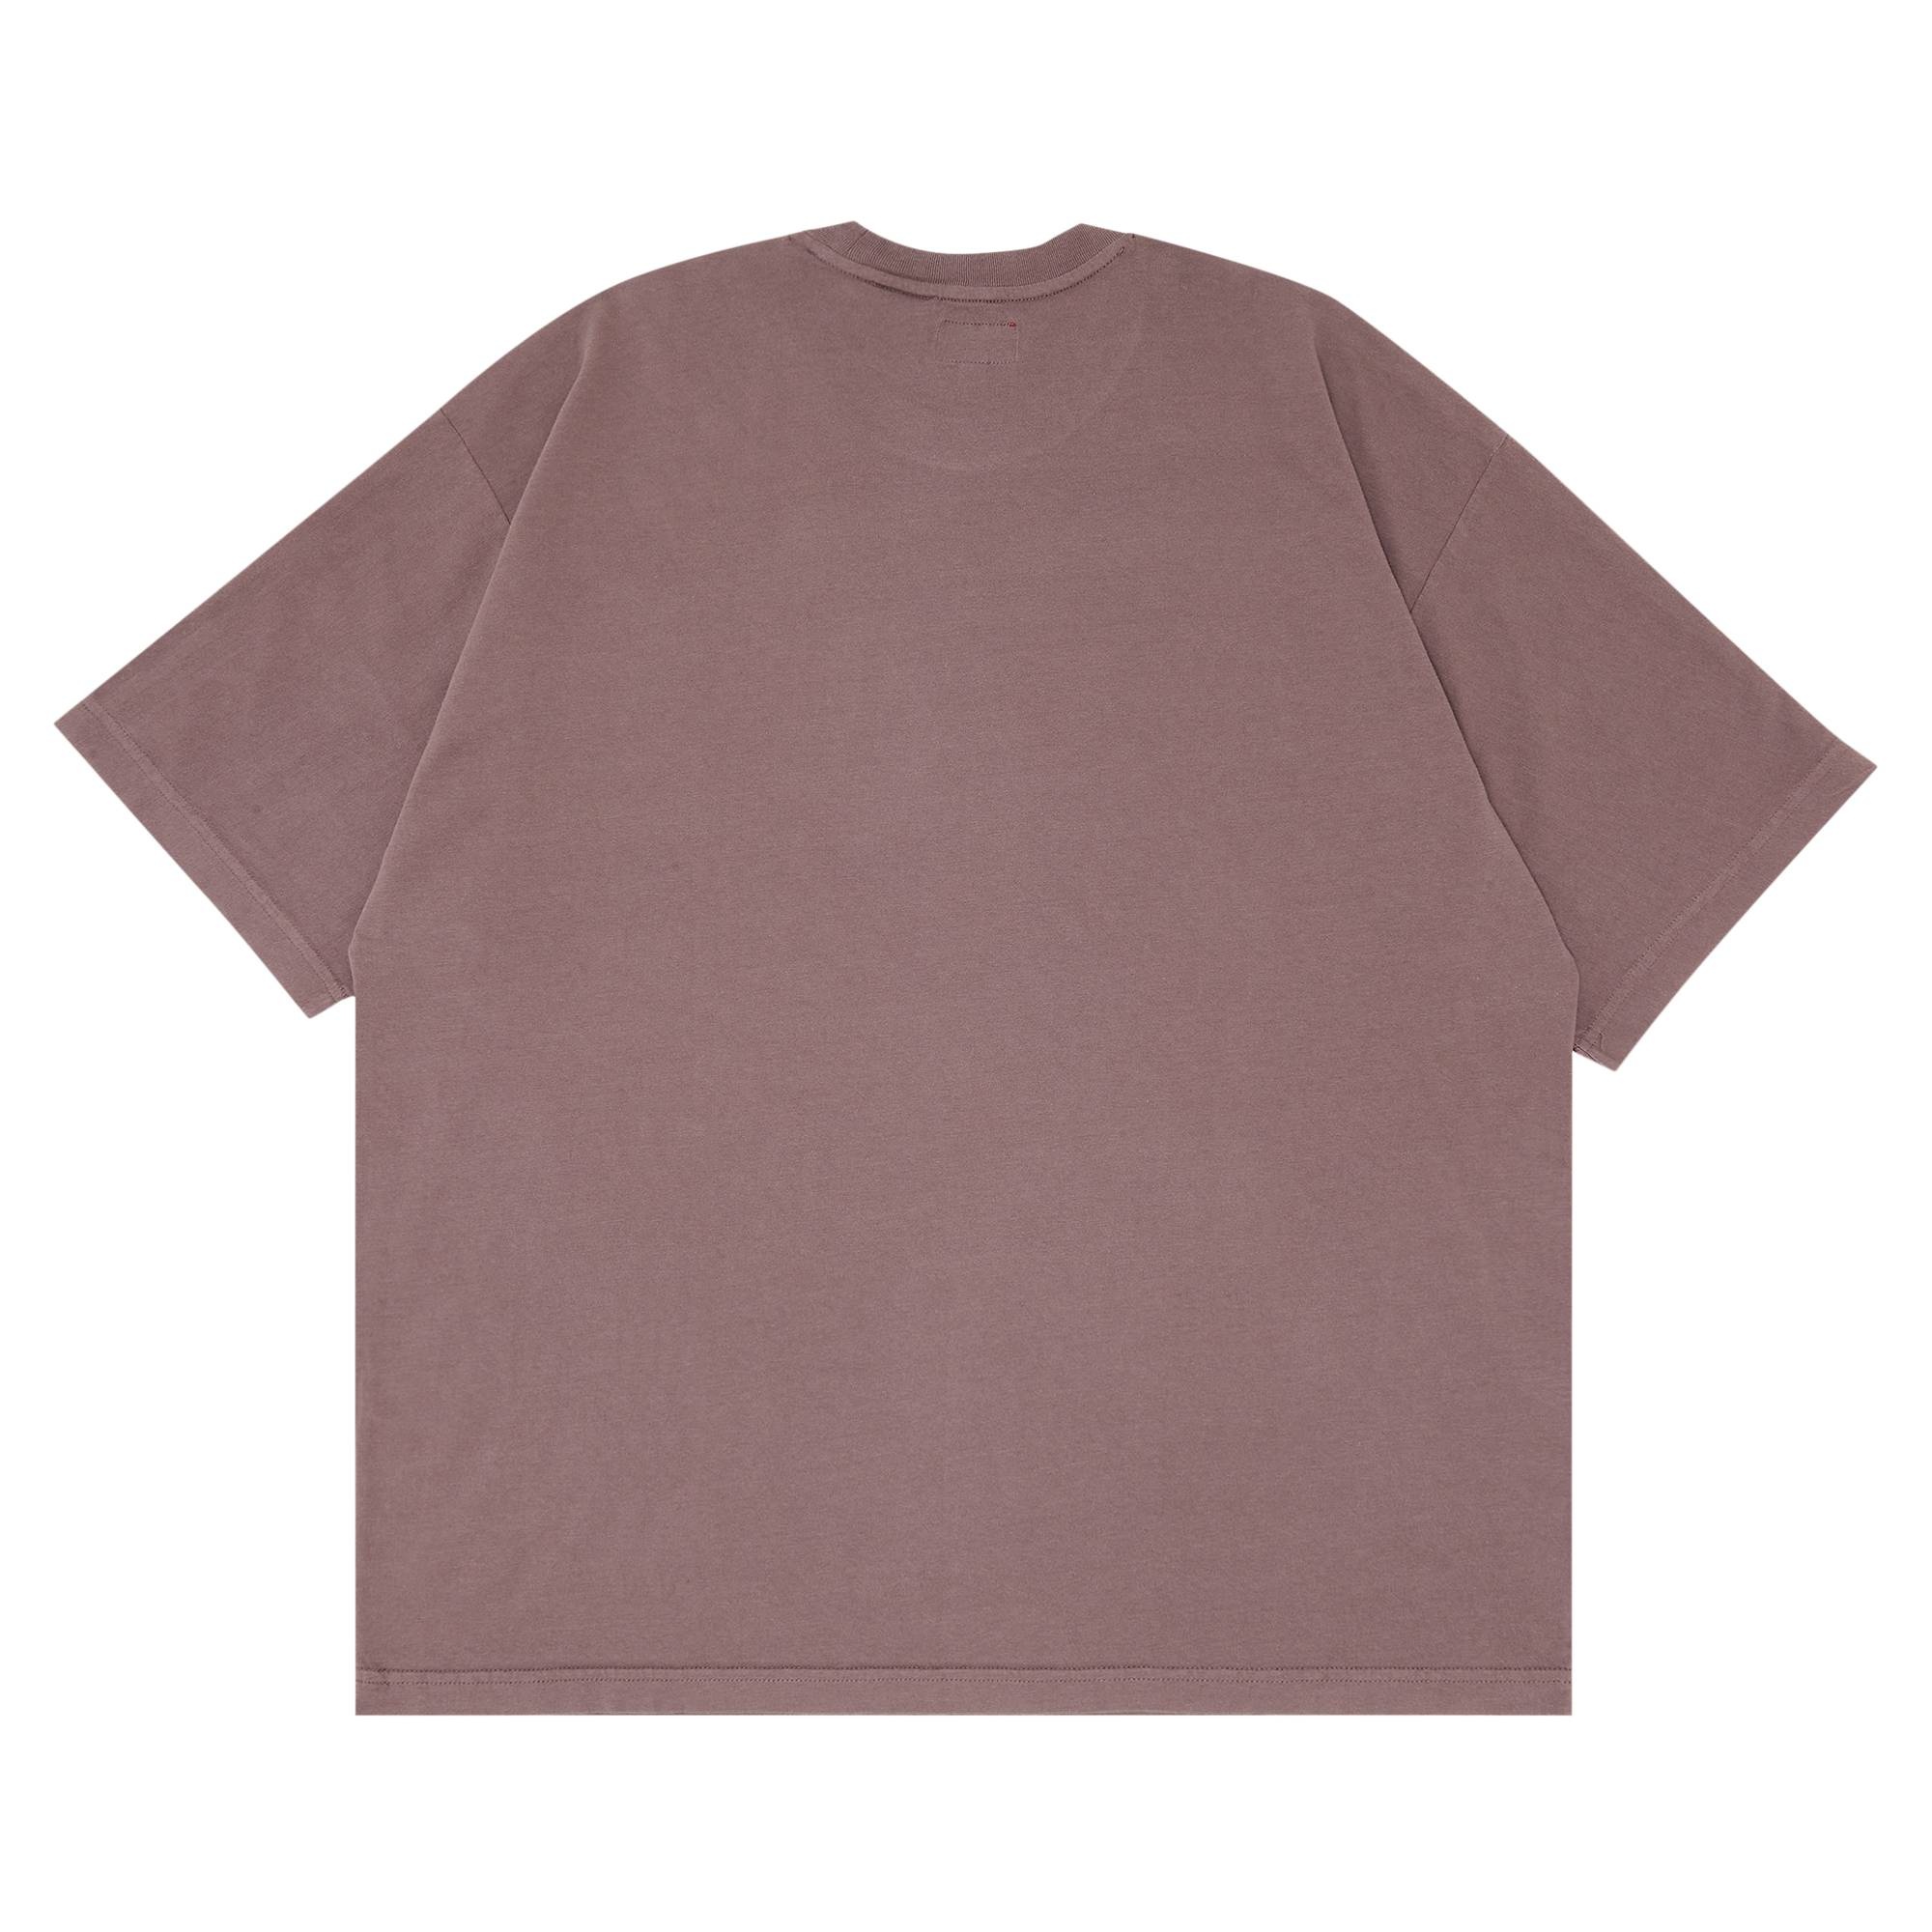 Supreme Intarsia Short-Sleeve Top 'Brown' - 2